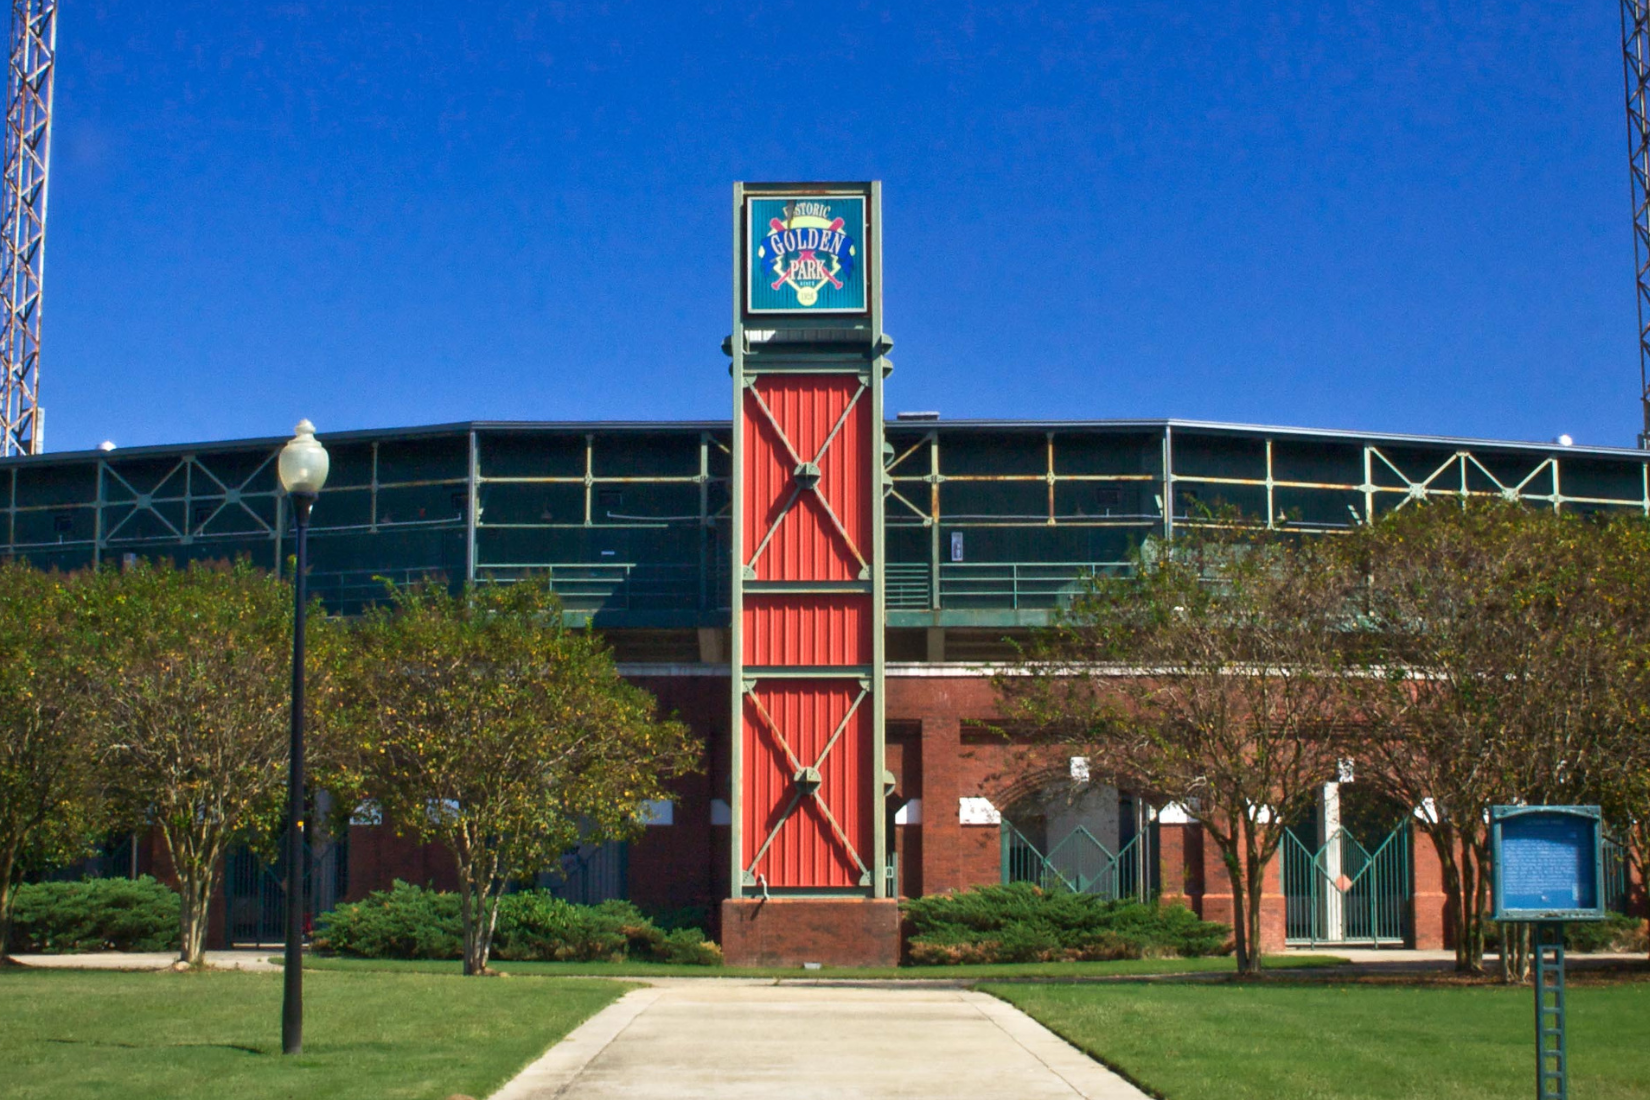 Exterior photo of Golden Park baseball stadium